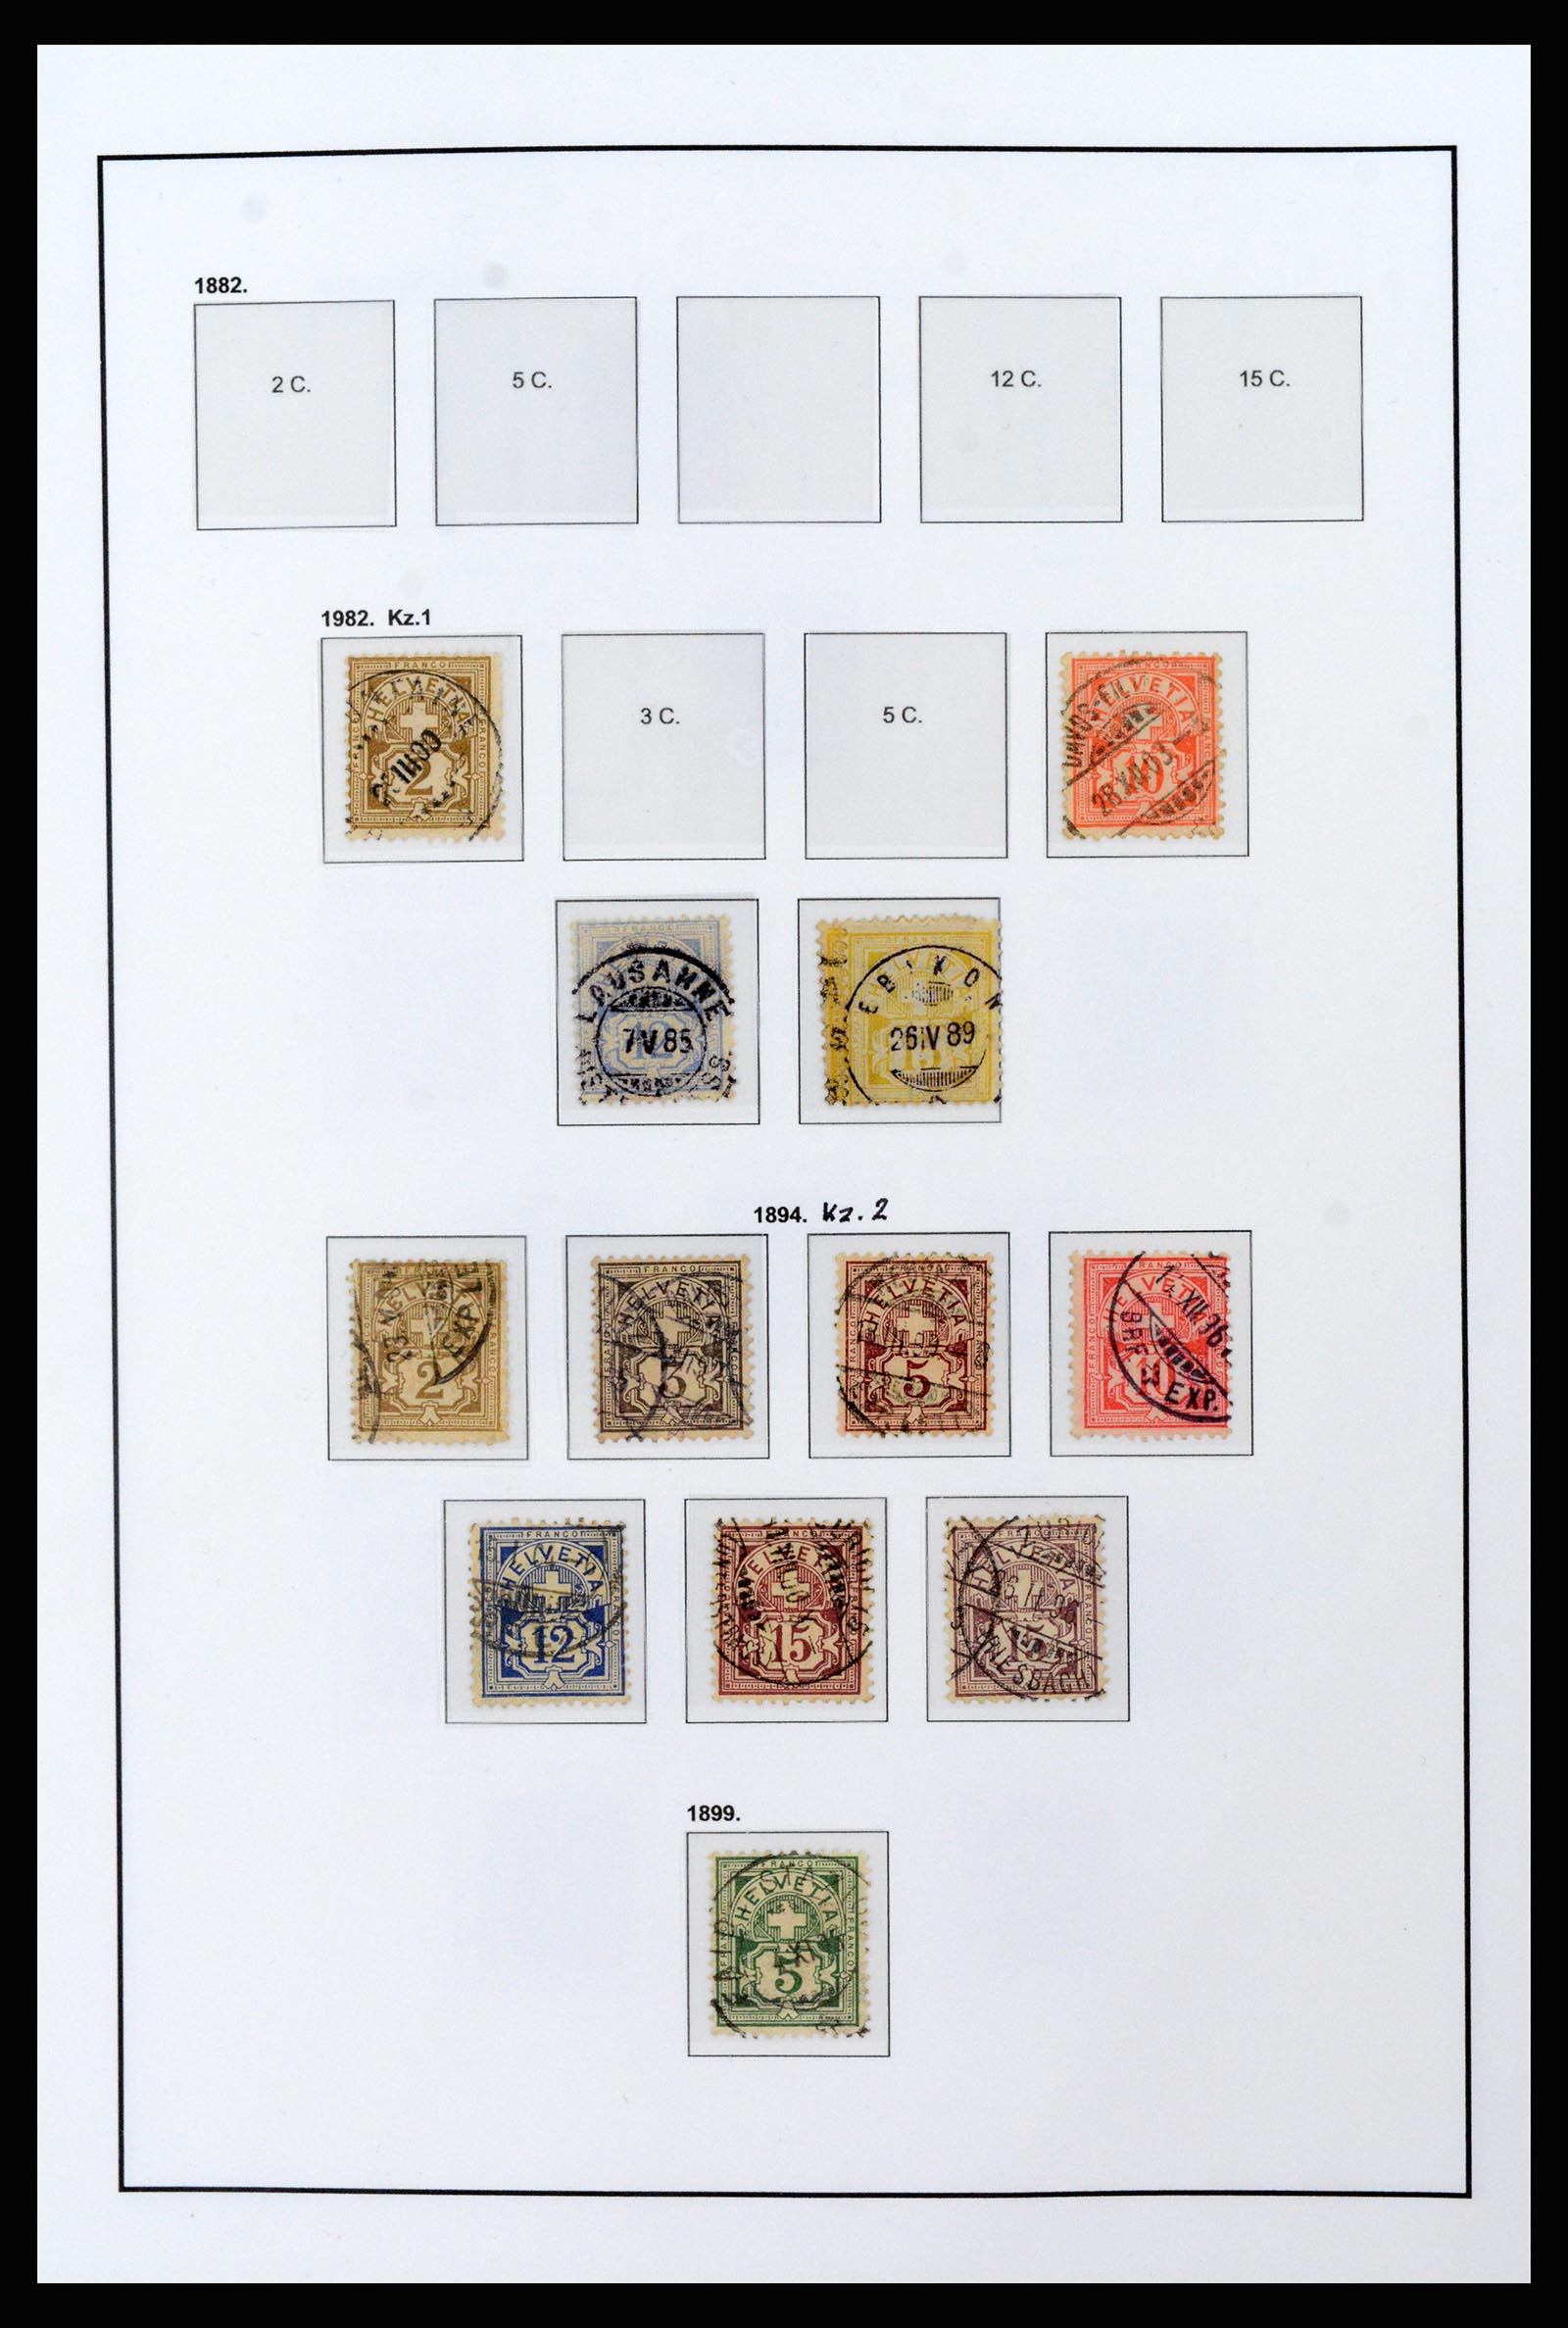 37225 002 - Stamp collection 37225 Switzerland 1854-2020.